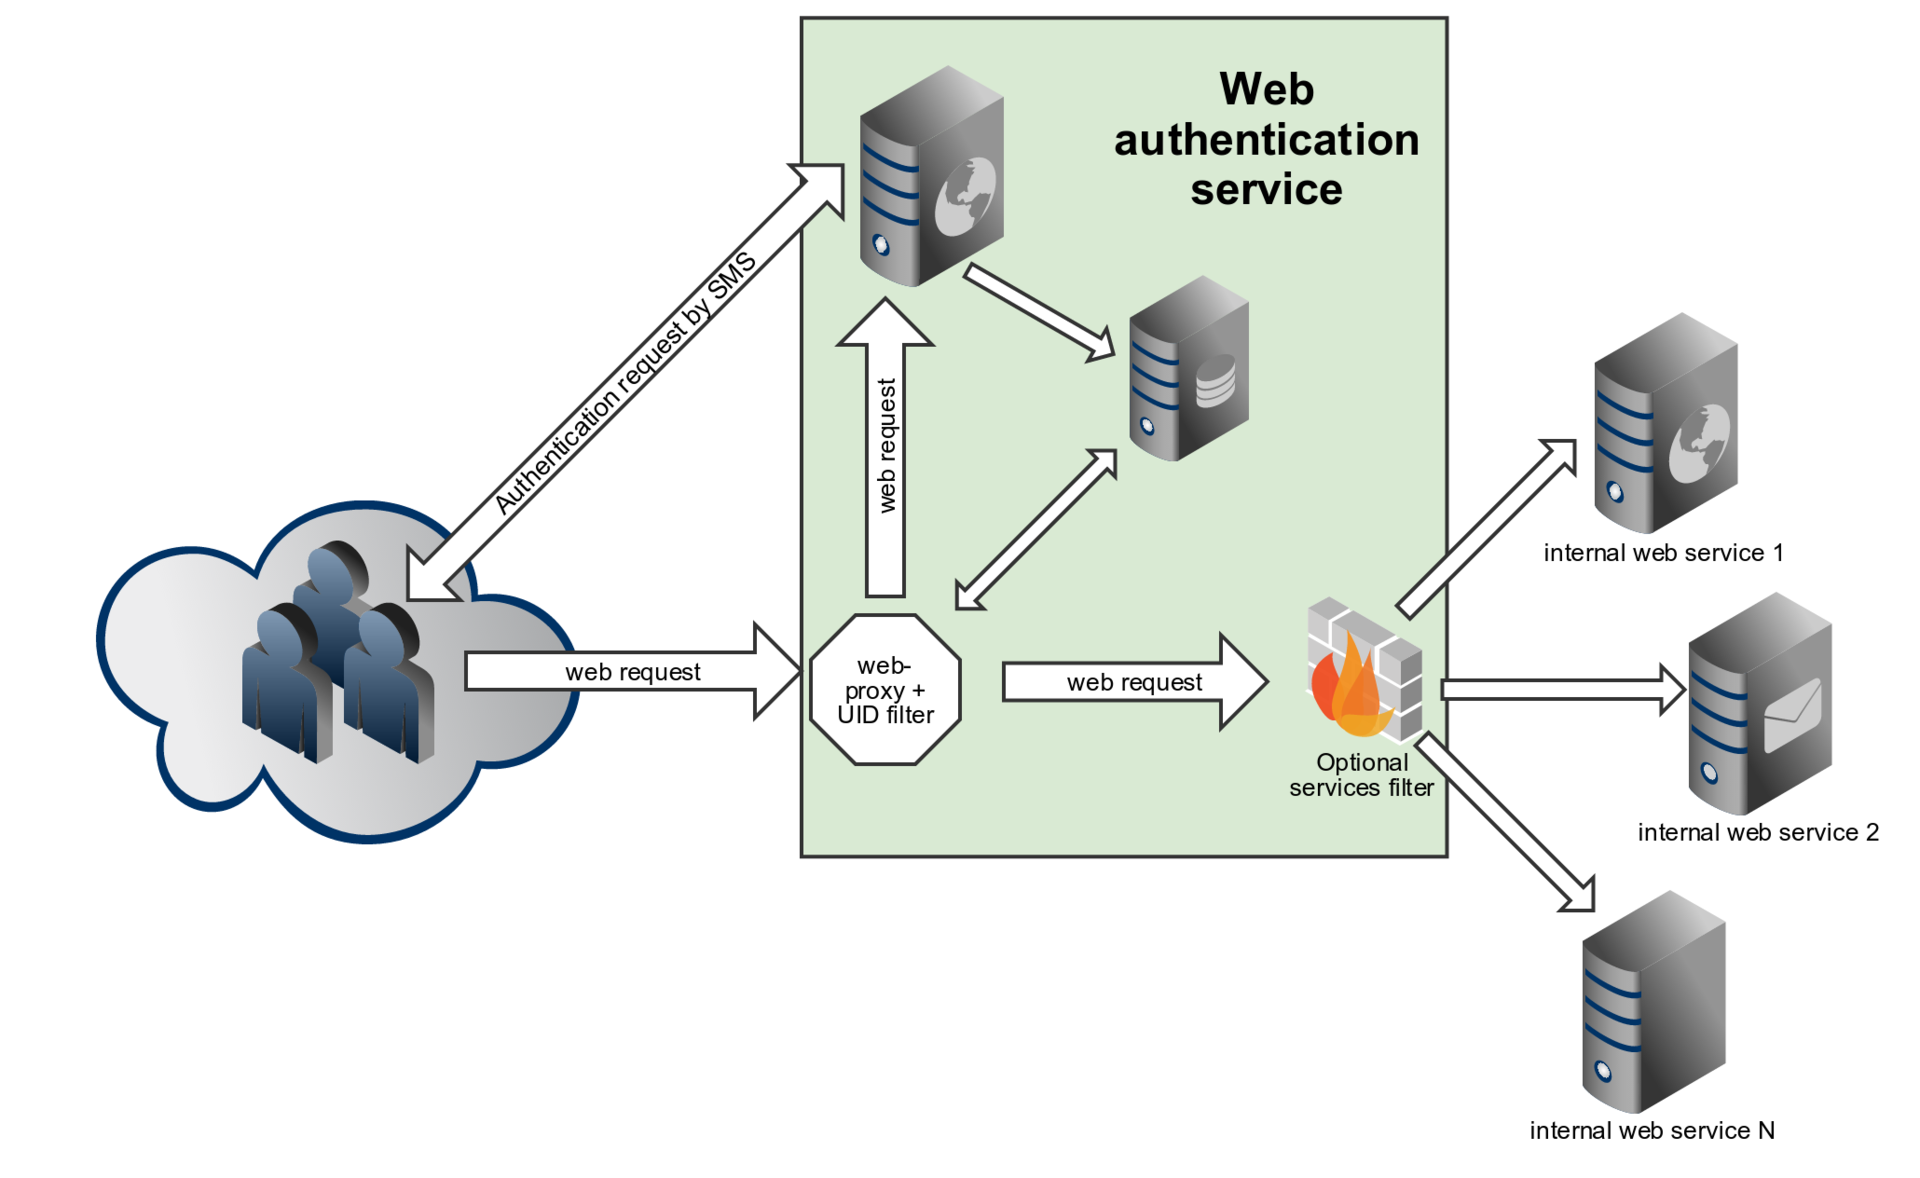 Web dozorgps ru. Схема двухфакторной аутентификации. Подсистема аутентификации. Архитектура web сервиса. Авторизация в системе.